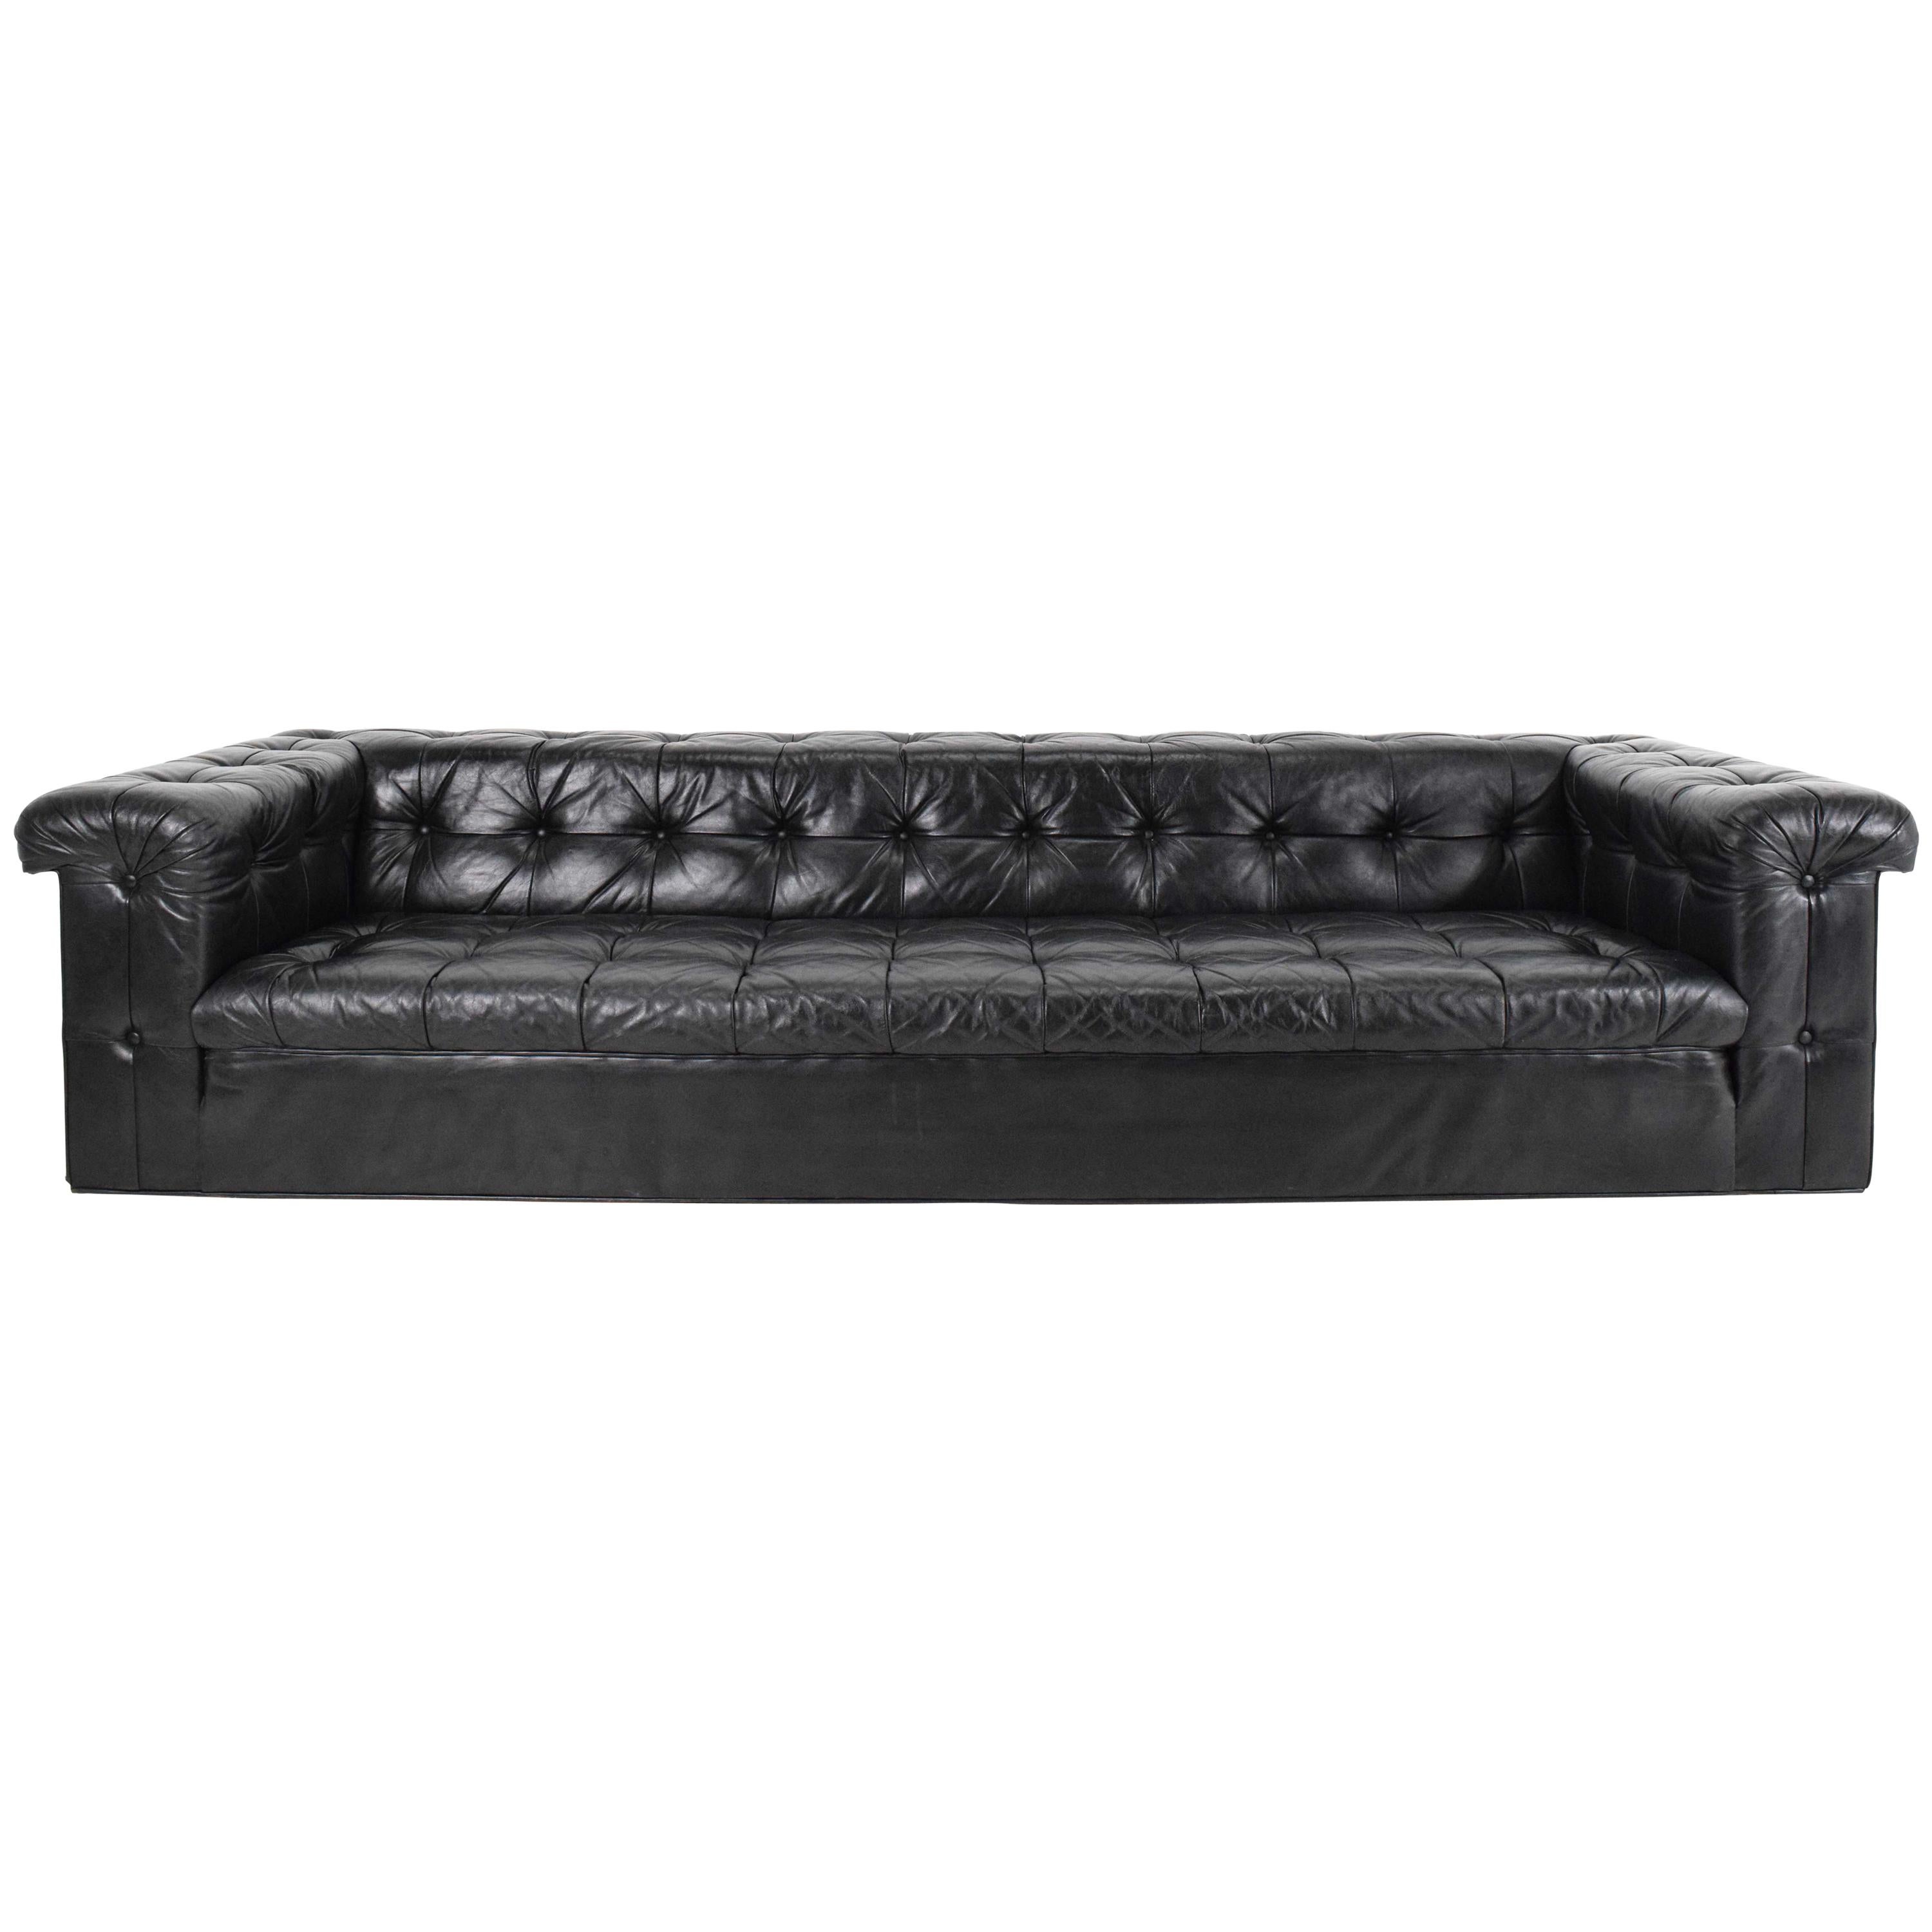 Edward Wormley for Dunbar Party Sofa Model 5407 in Black Leather